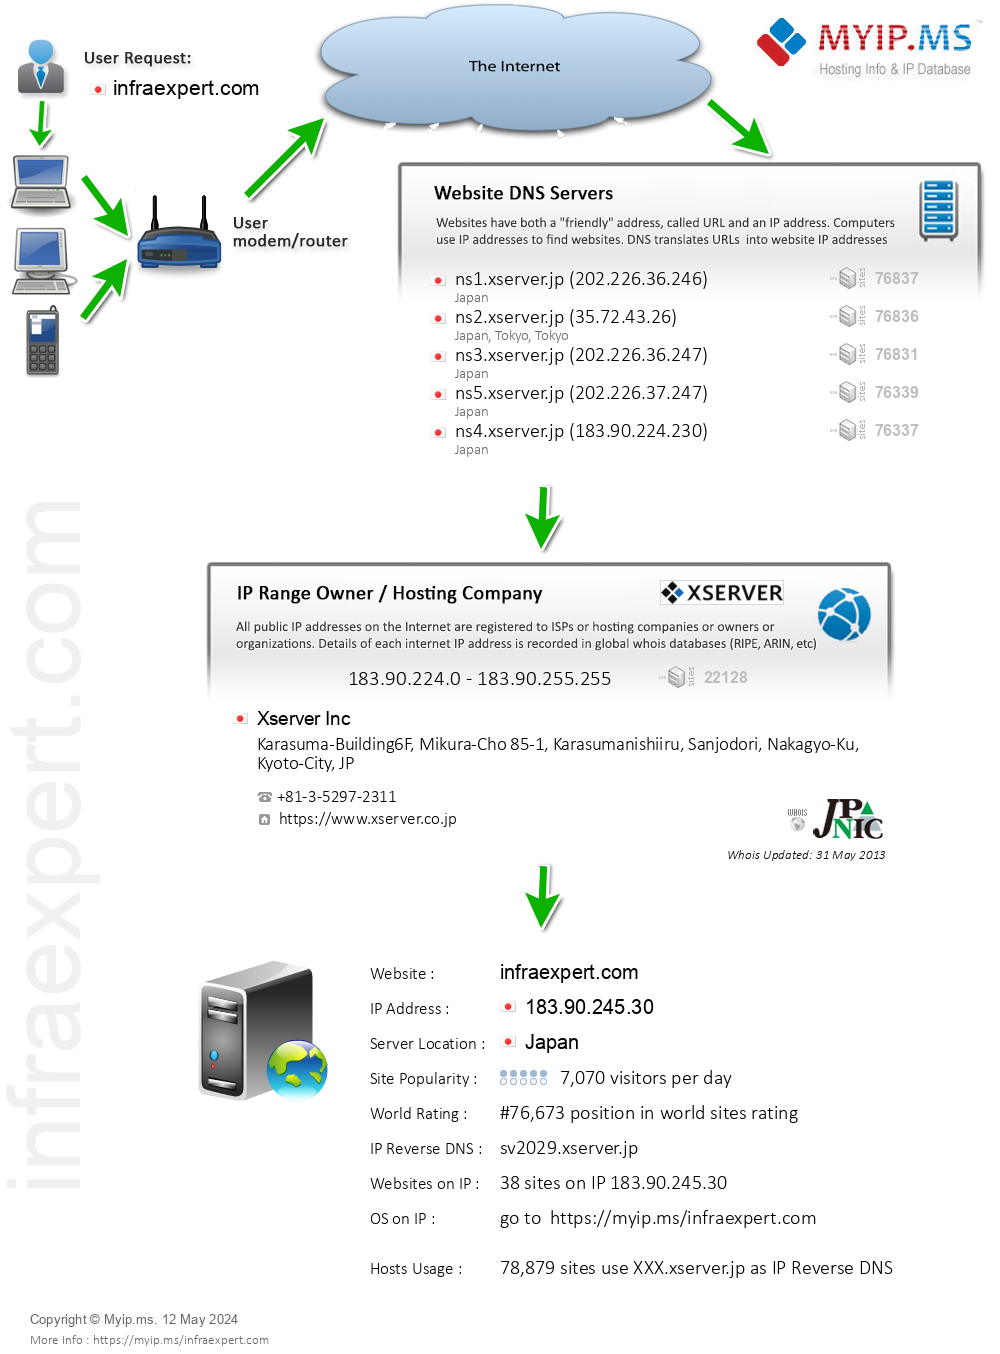 Infraexpert.com - Website Hosting Visual IP Diagram